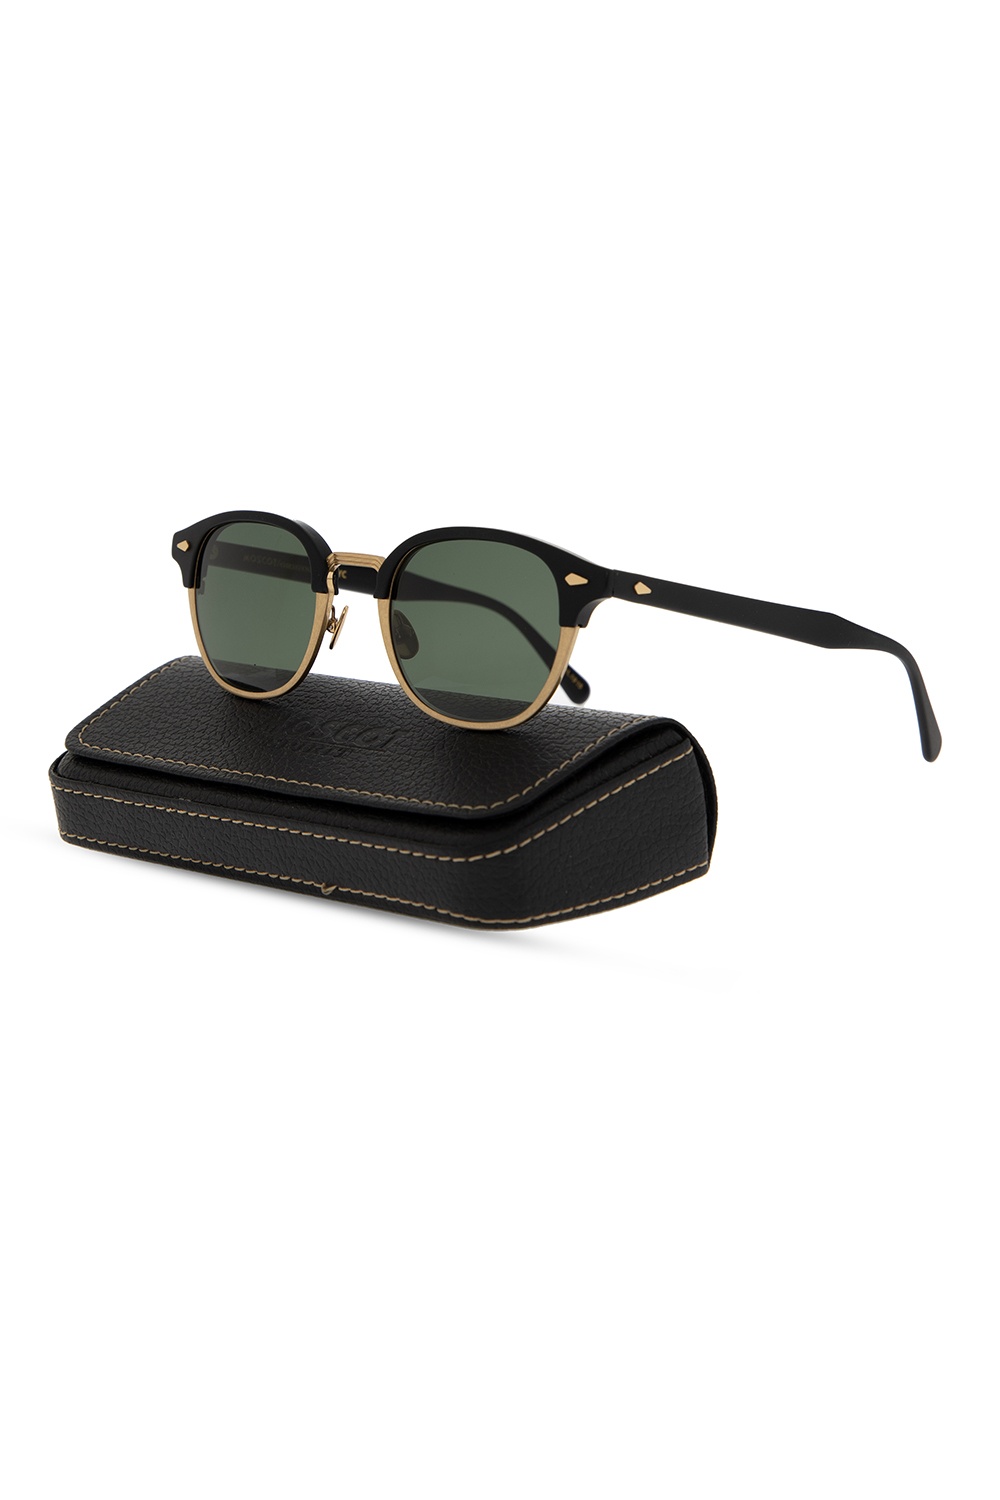 Moscot ‘Lemtosh’ sunglasses